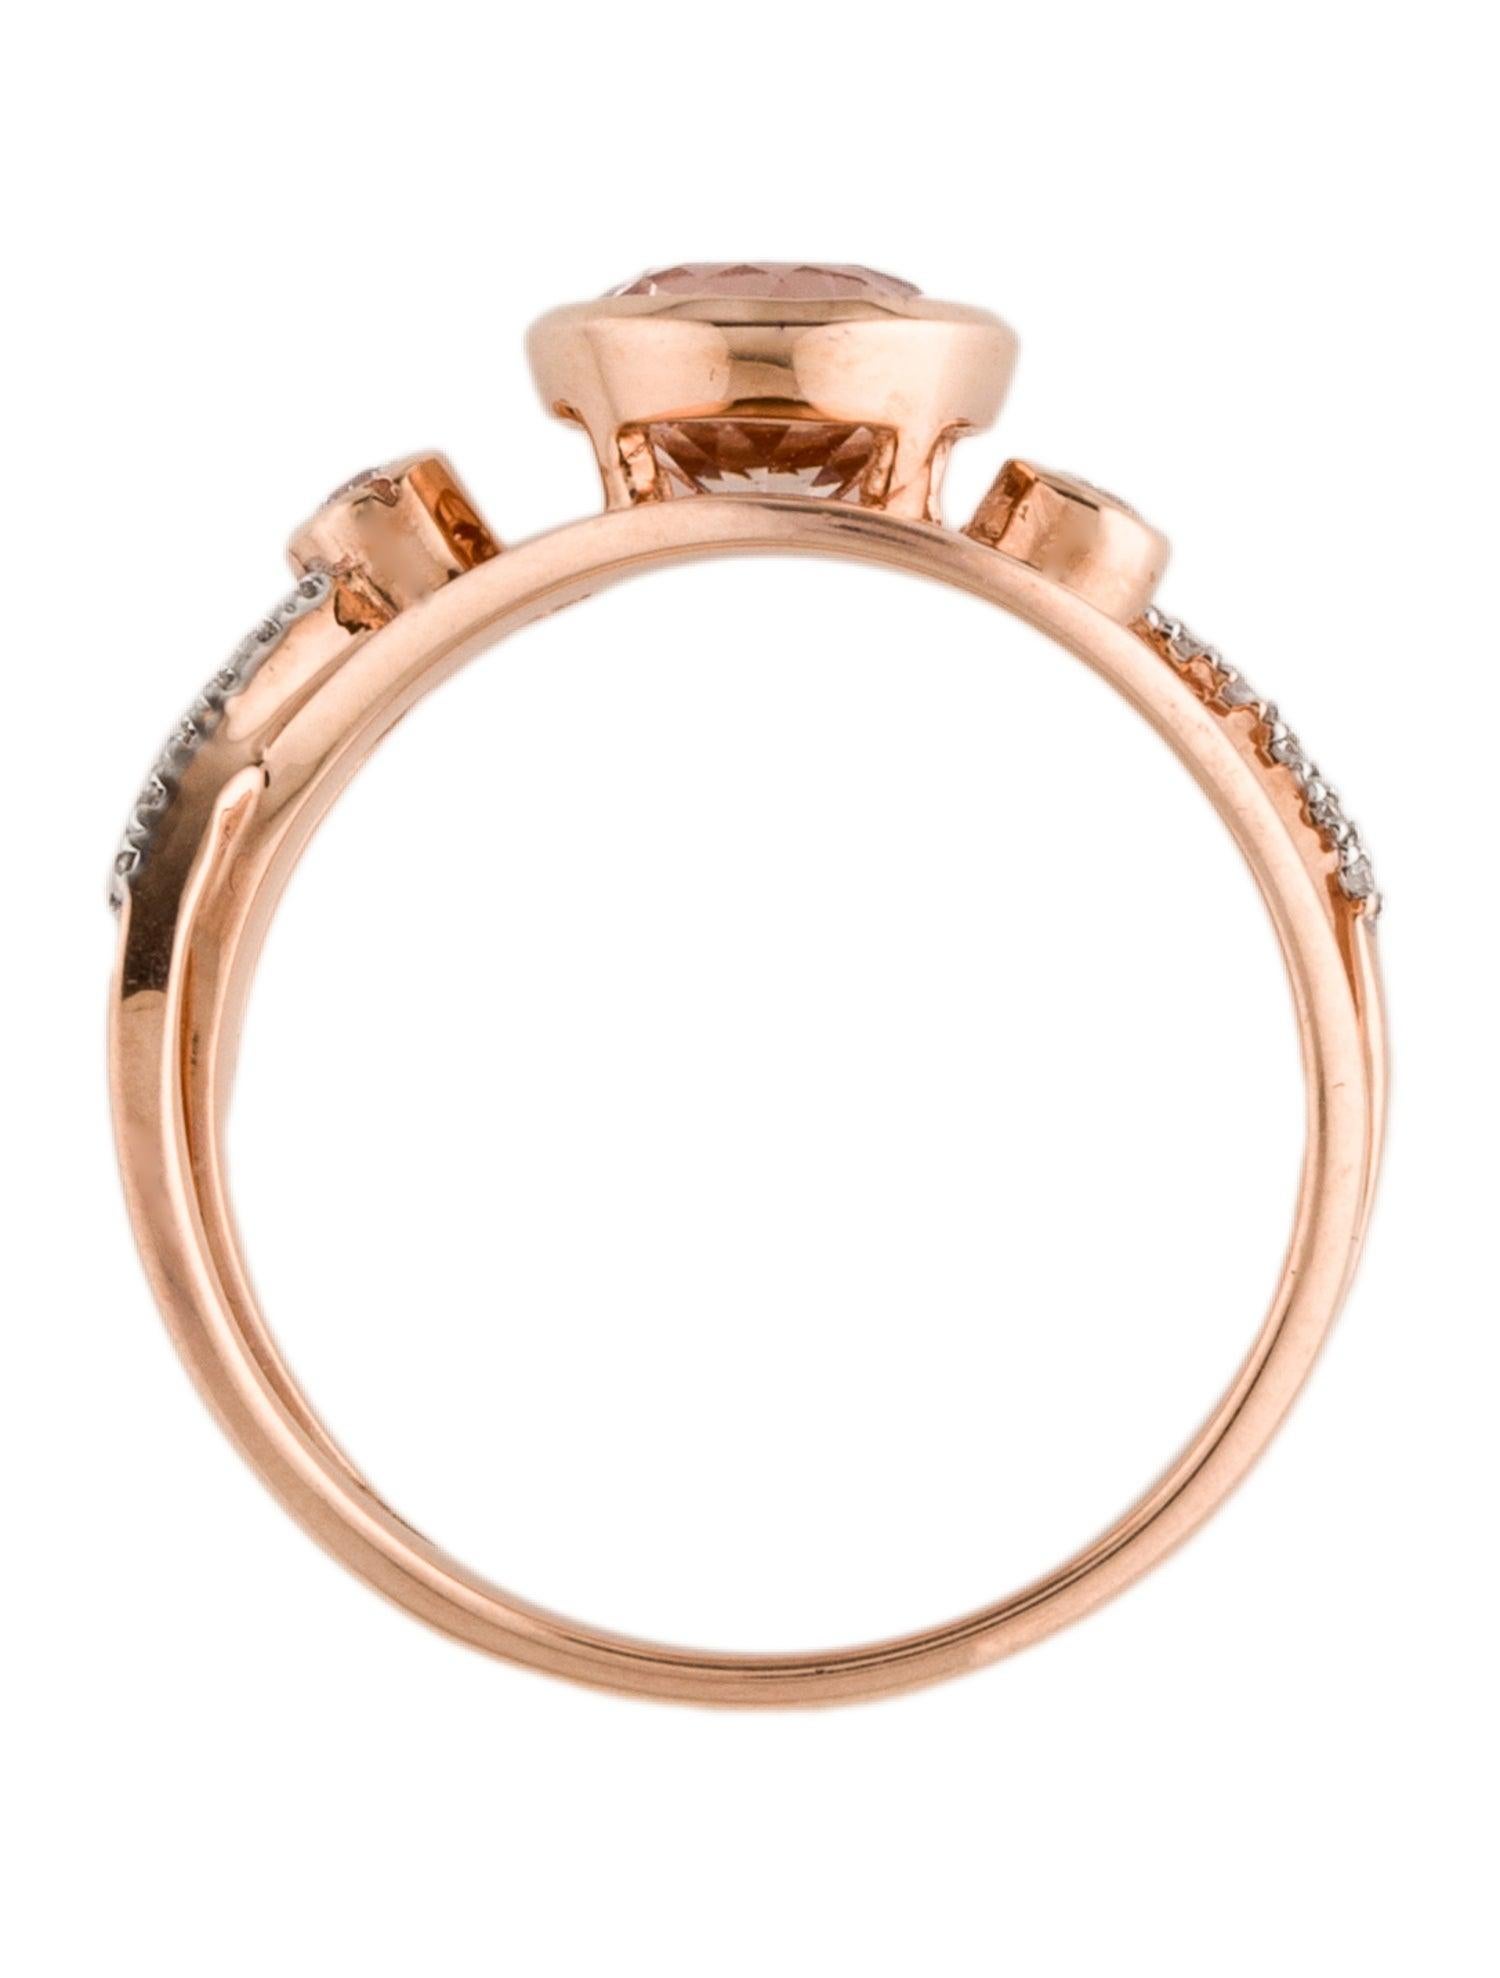 Women's Elegant 14K Rose Gold Morganite & Diamond Cocktail Ring, 1.38ctw, Size 7.5 For Sale